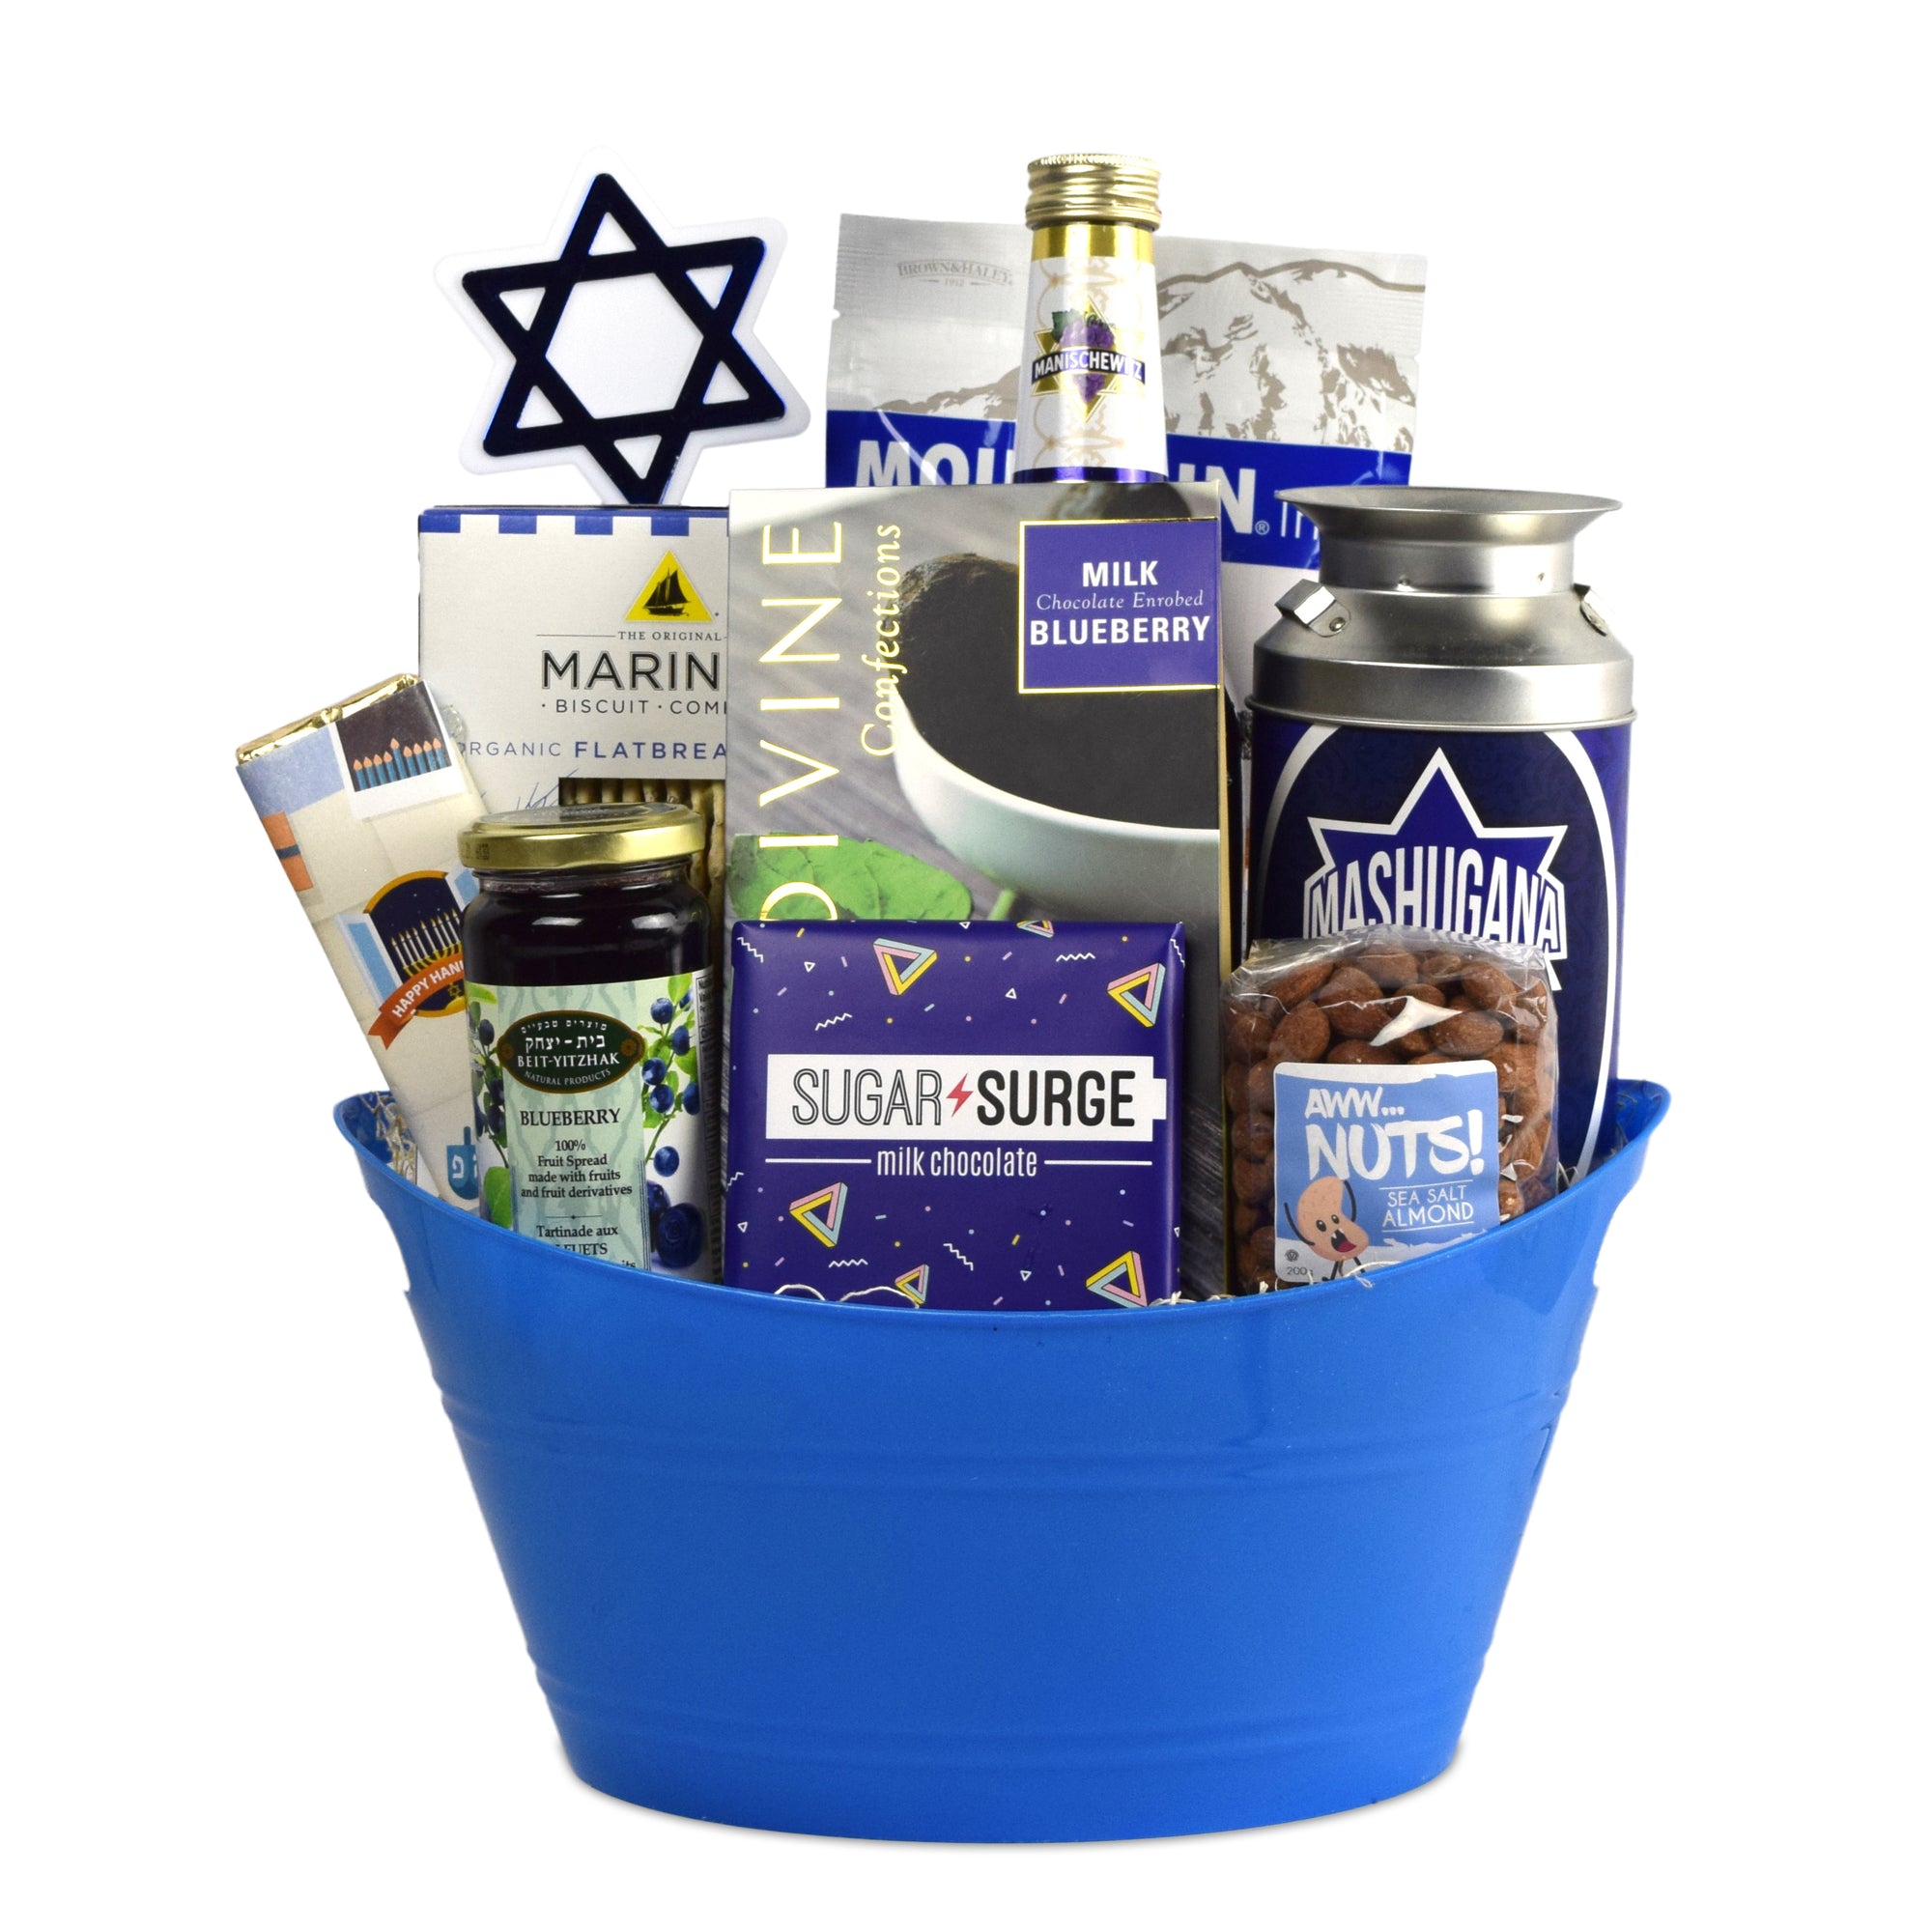 Bucket of Beer Gourmet Gift Set - beer gift baskets - USA delivery